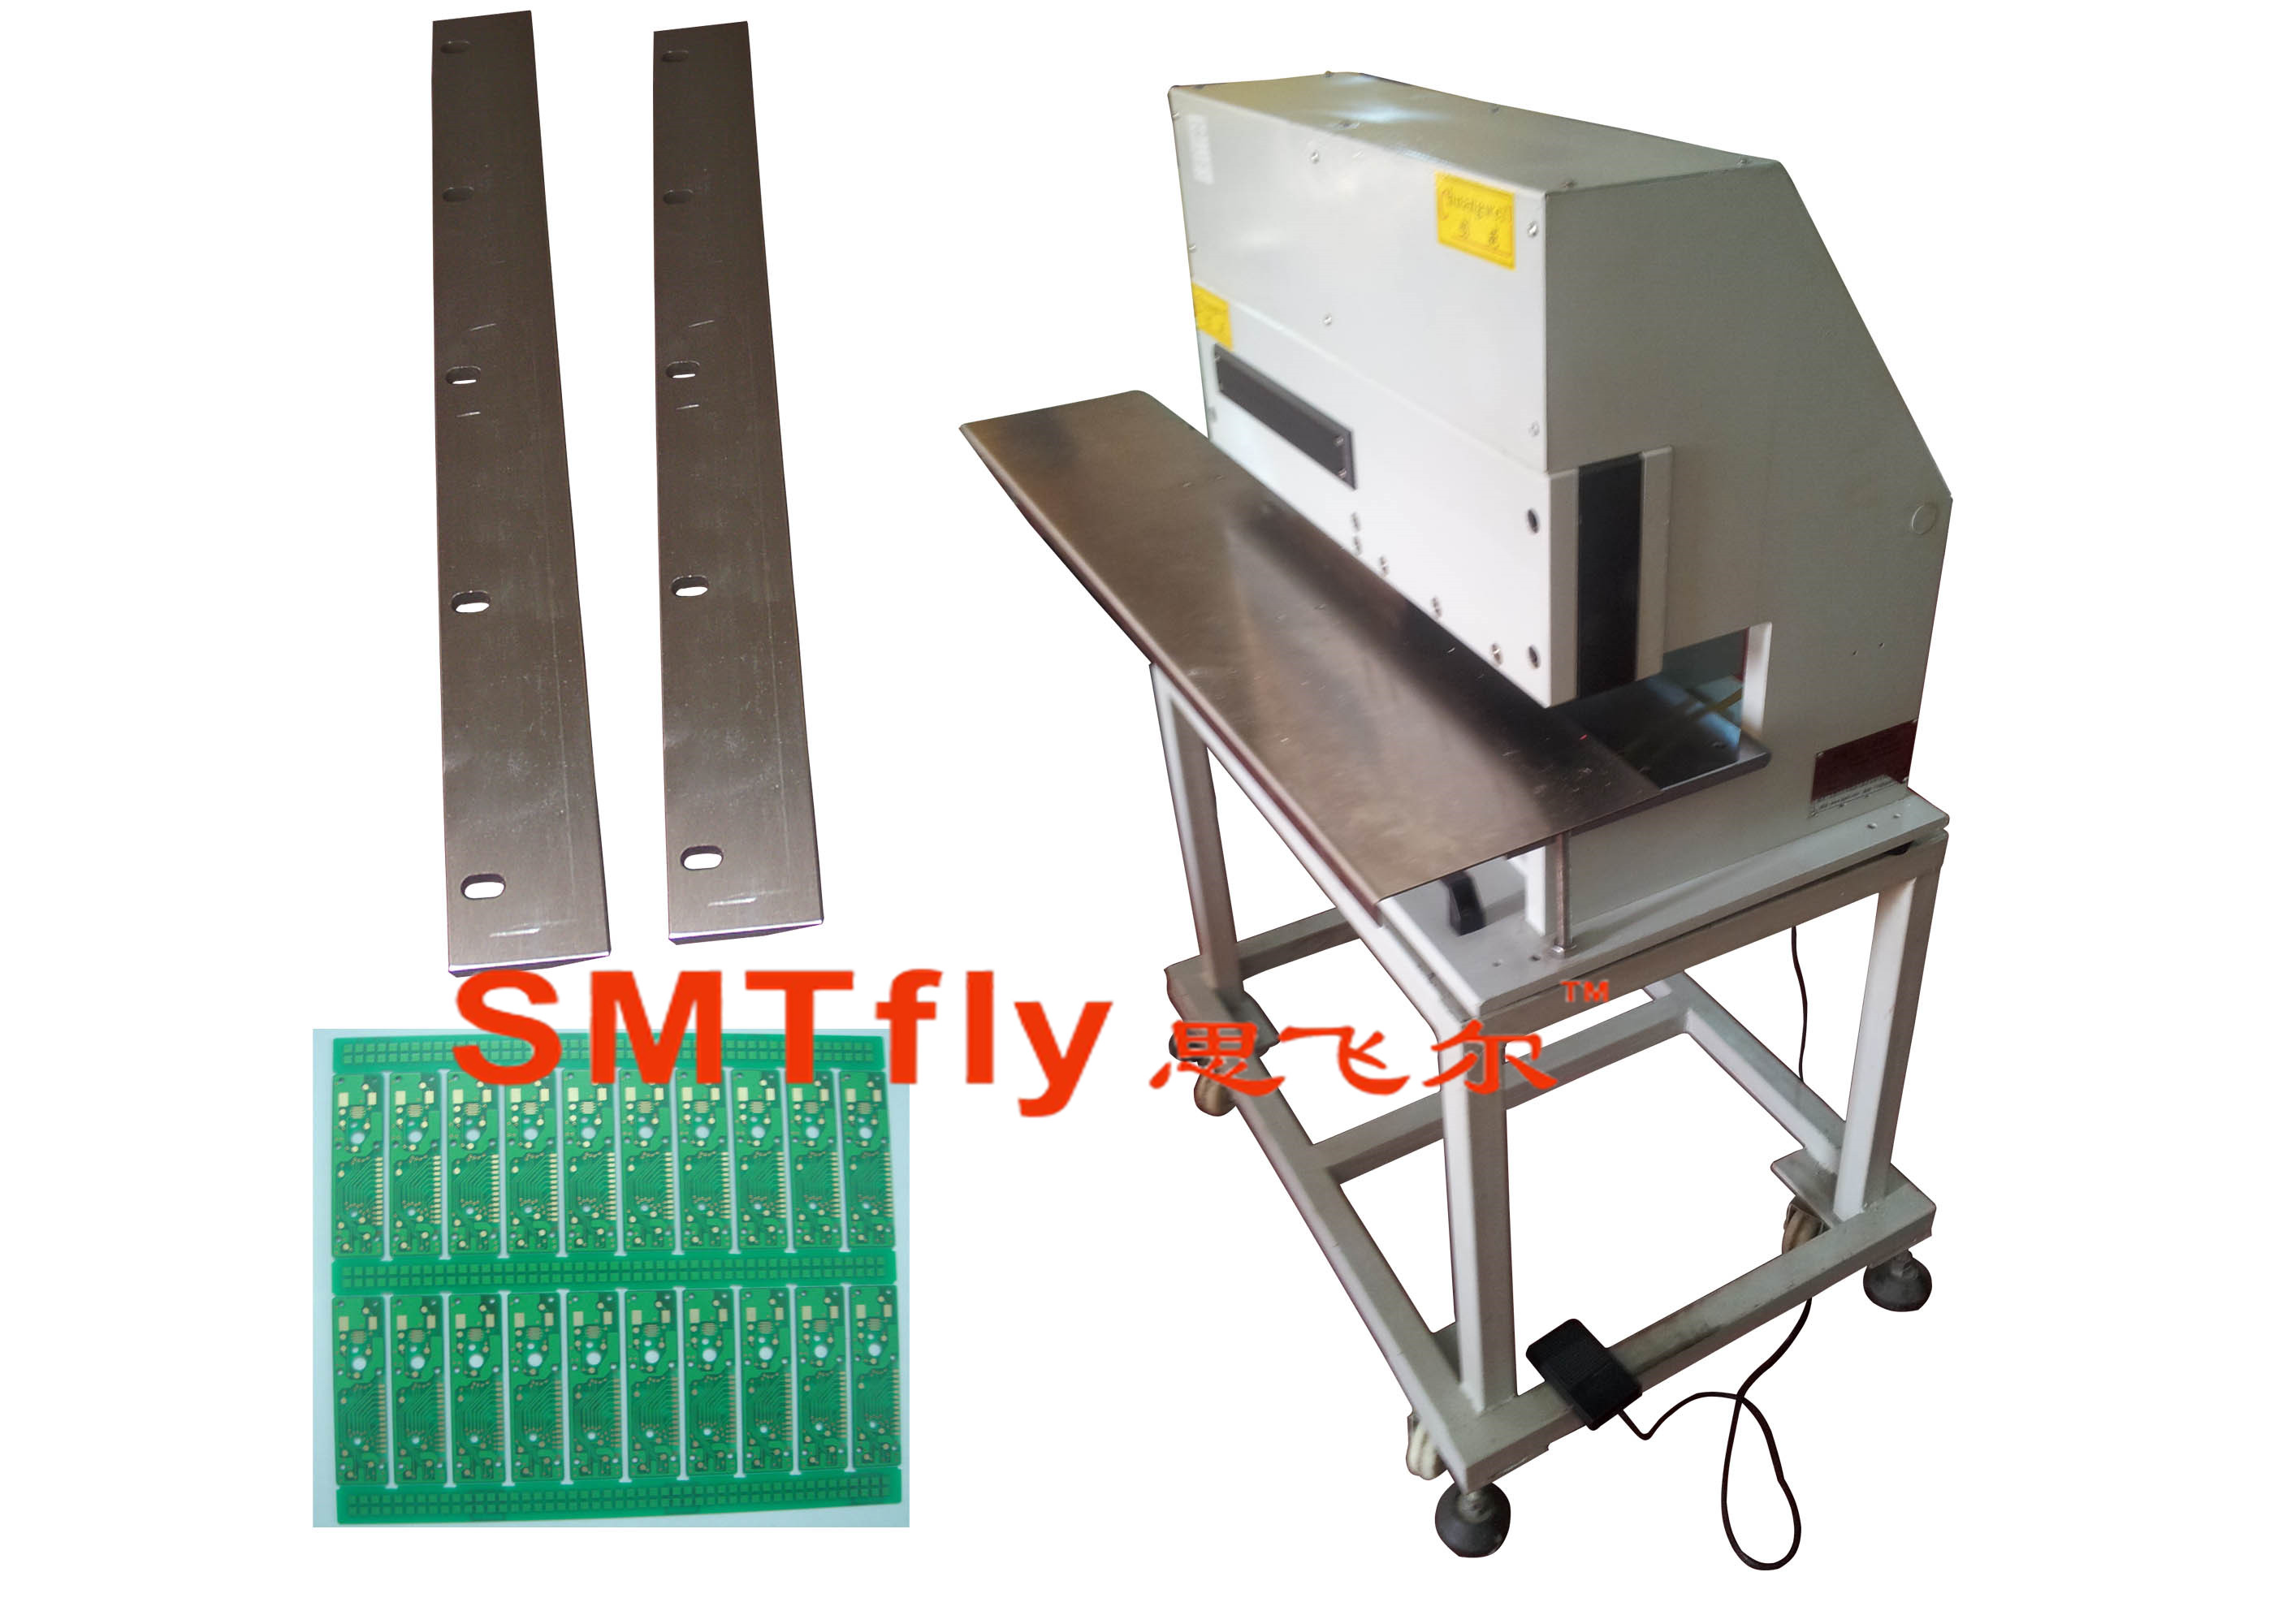 PCB Cutting Tool,SMTfly-3